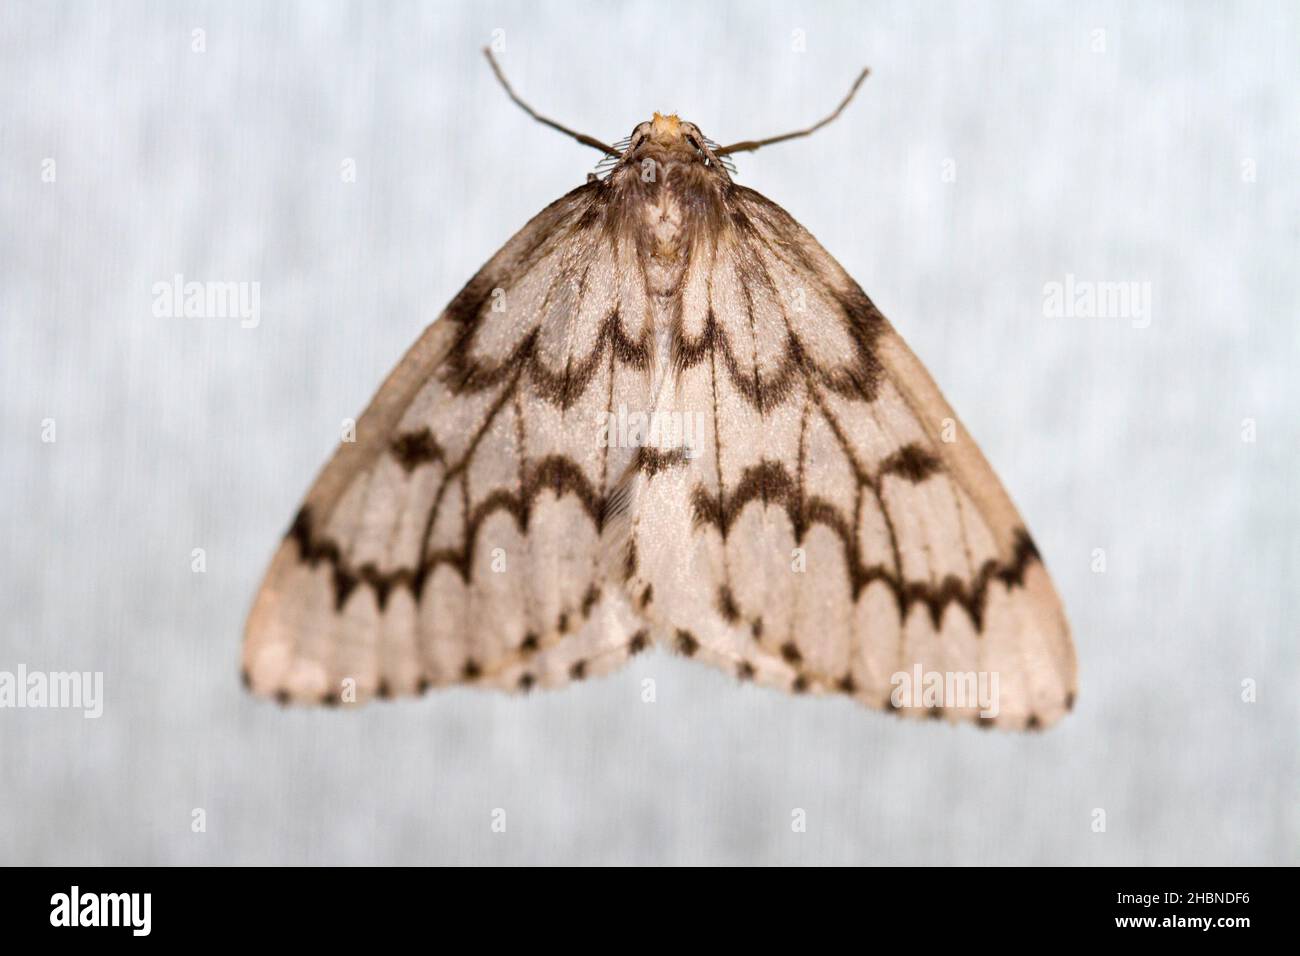 A Phantom Hemlock Looper moth (Nepytia phantasmaria) resting on a frosted glass window pane in Nanaimo, Vancouver Island, BC, Canada Stock Photo